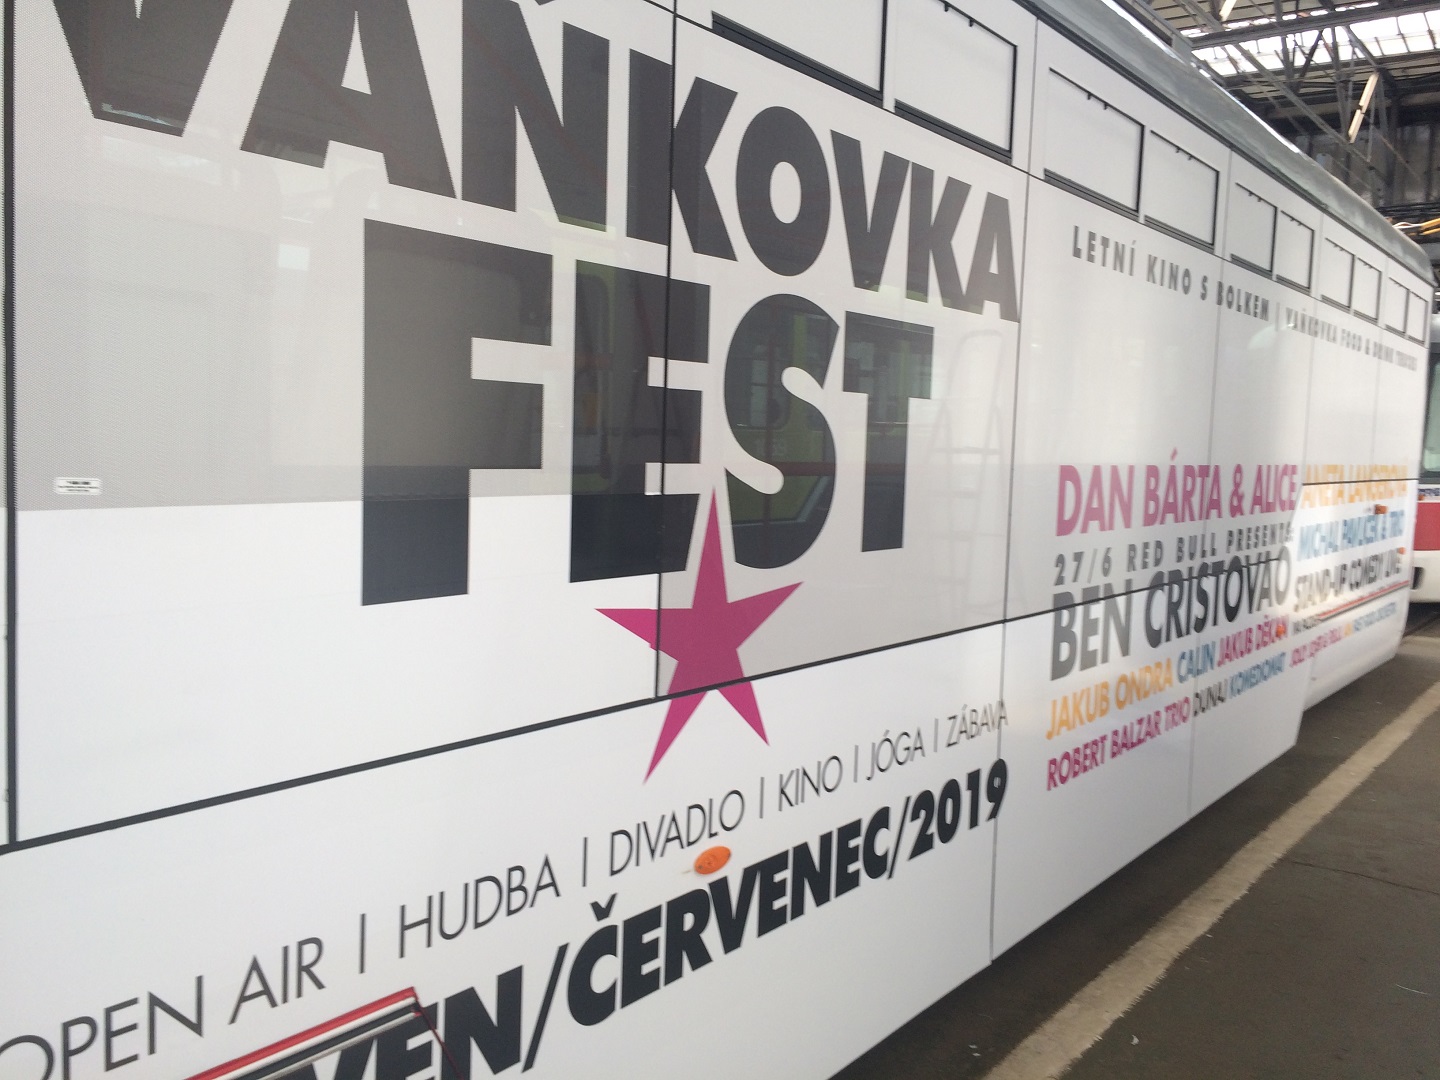 Polep tramvaje Vaňkovka Fest